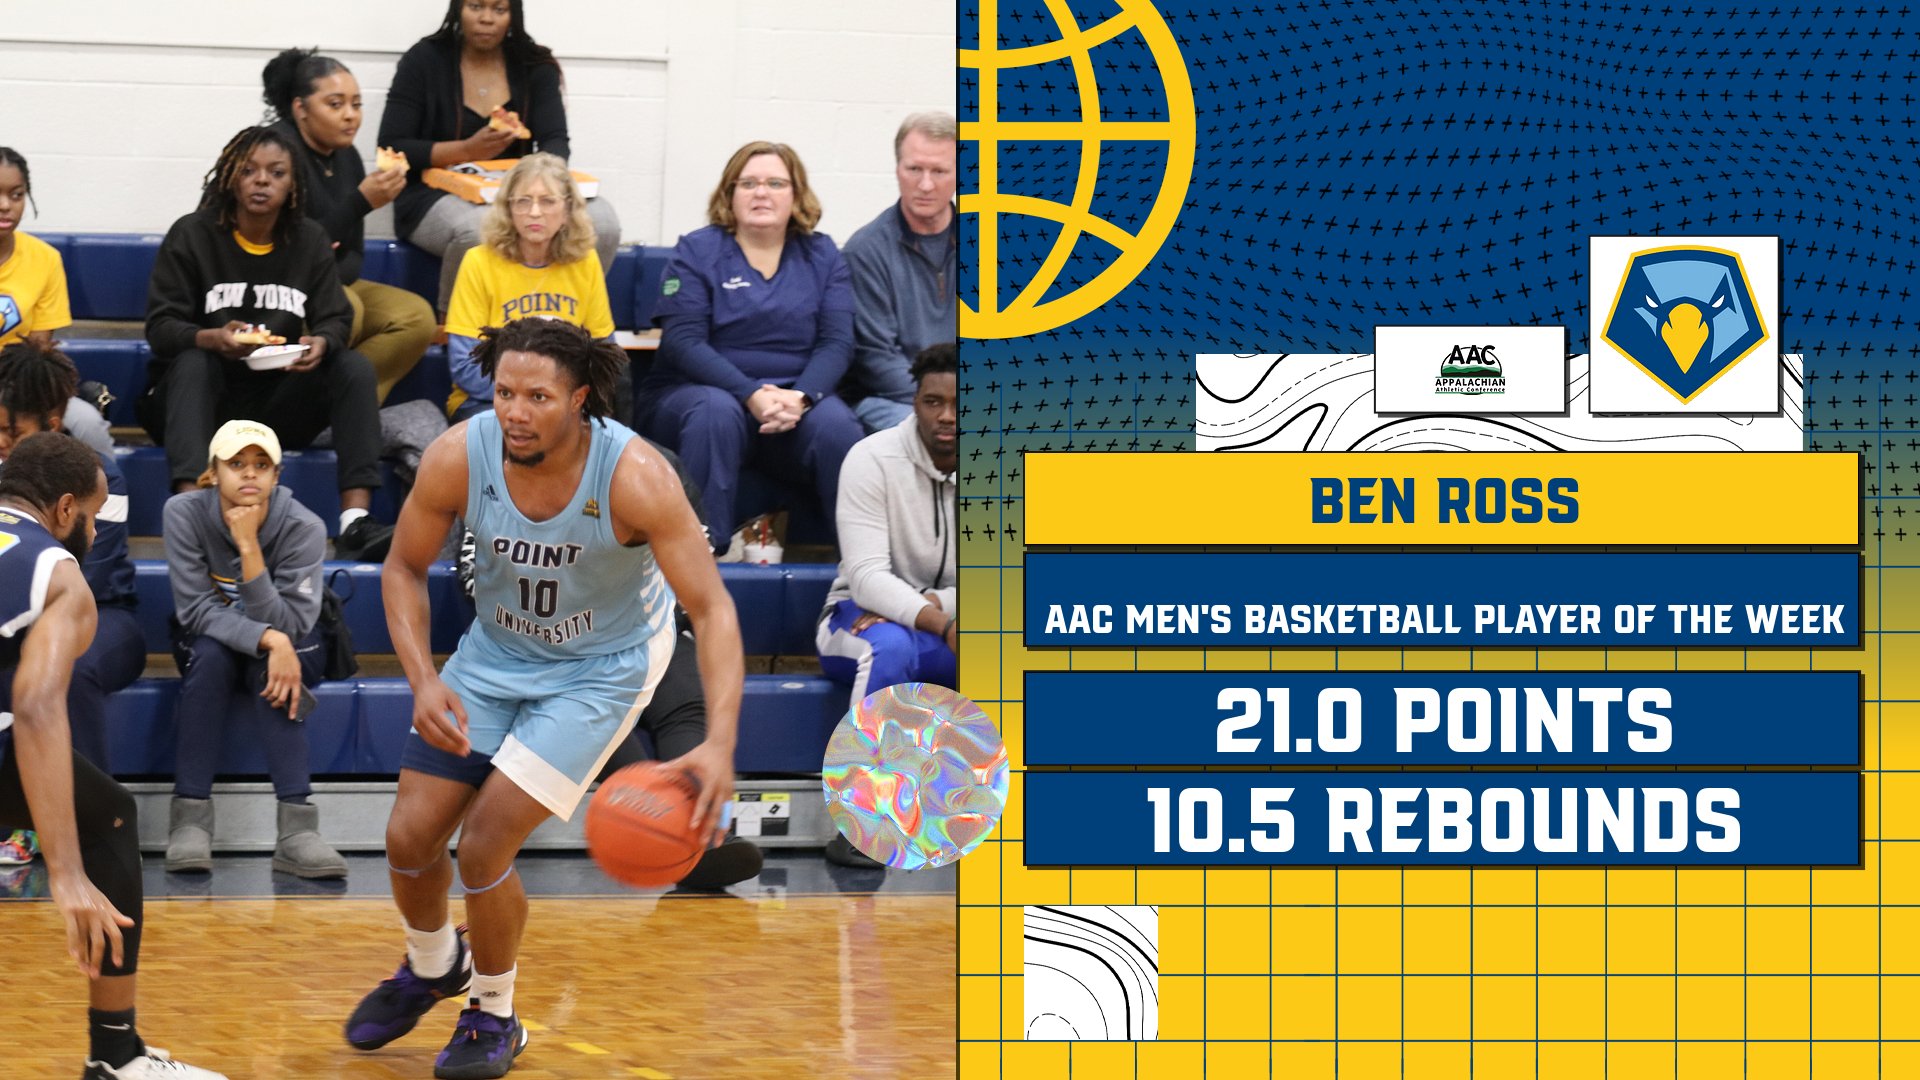 Ben Ross earns the AAC Men's Basketball Player of the Week in final week of the Regular Season